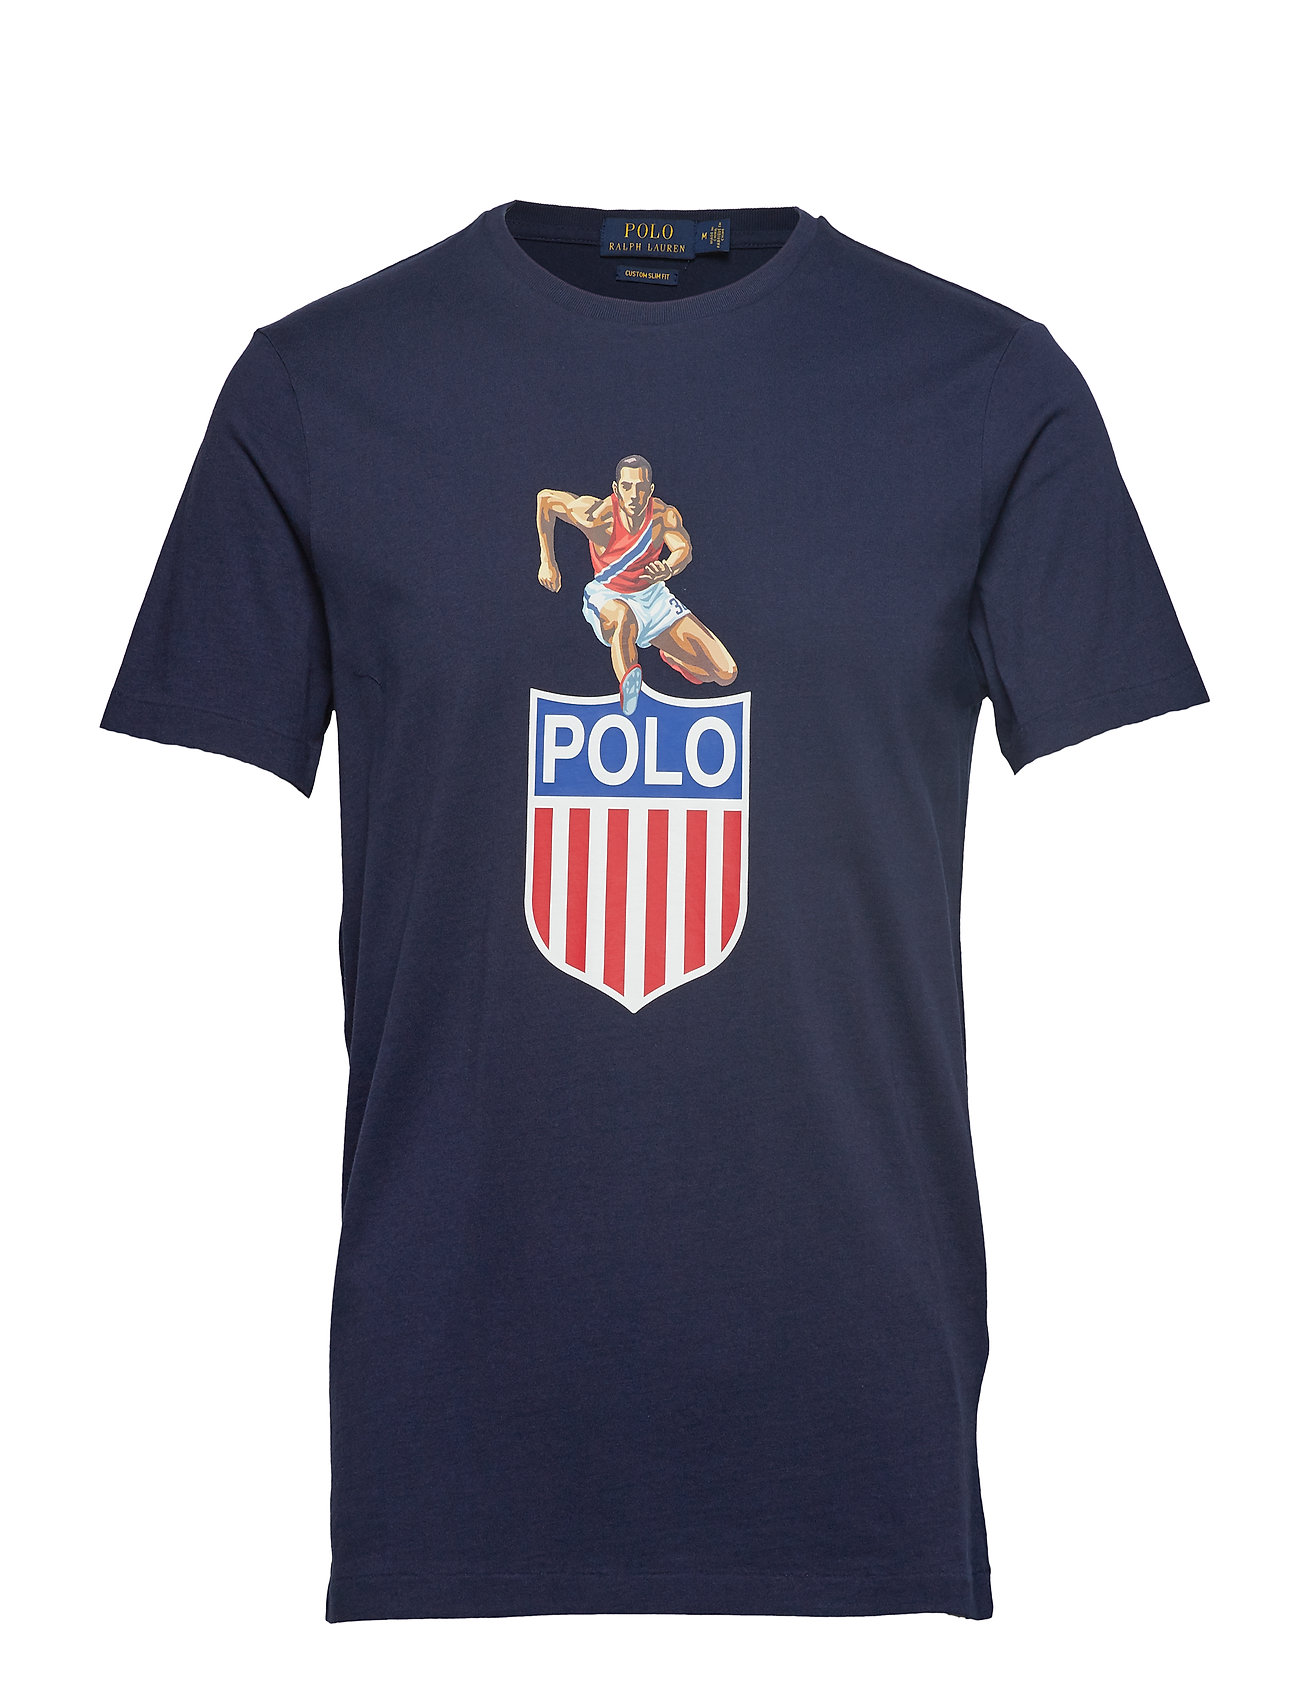 Polo Ralph Lauren Graphic T Shirts Flash Sales, 52% OFF | jsazlaw.com